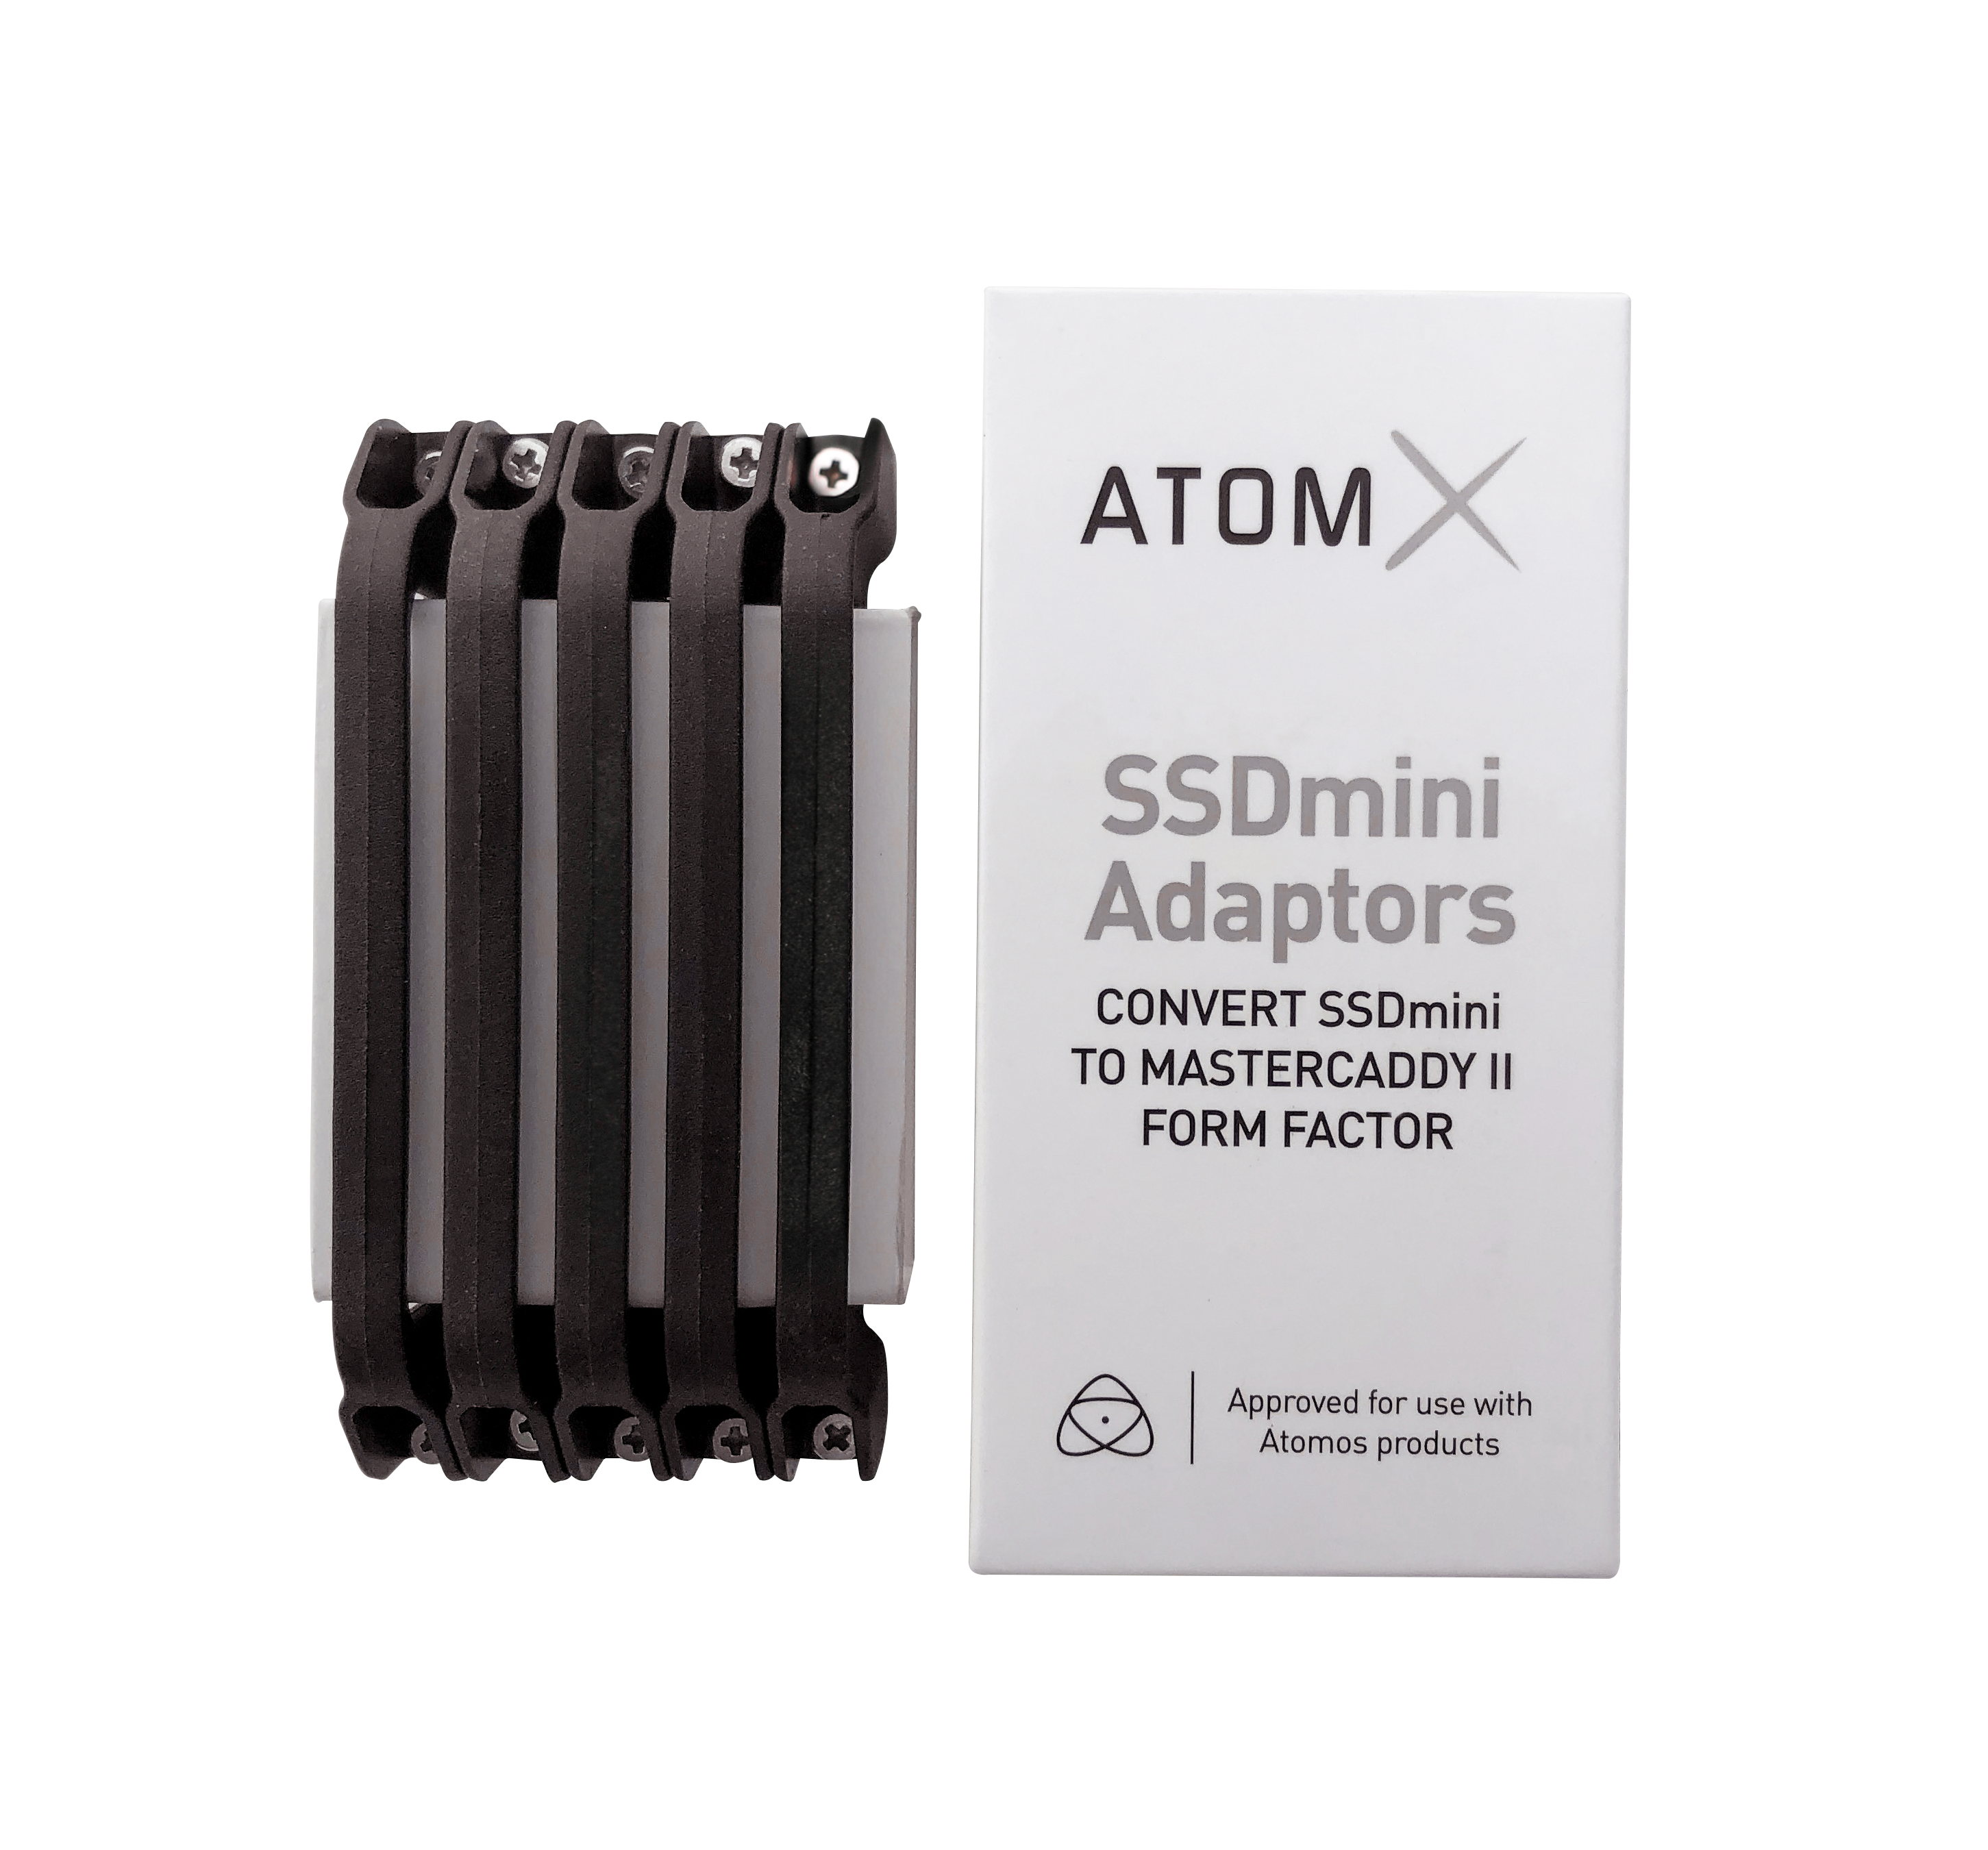 AtomX SSDmini Adaptors